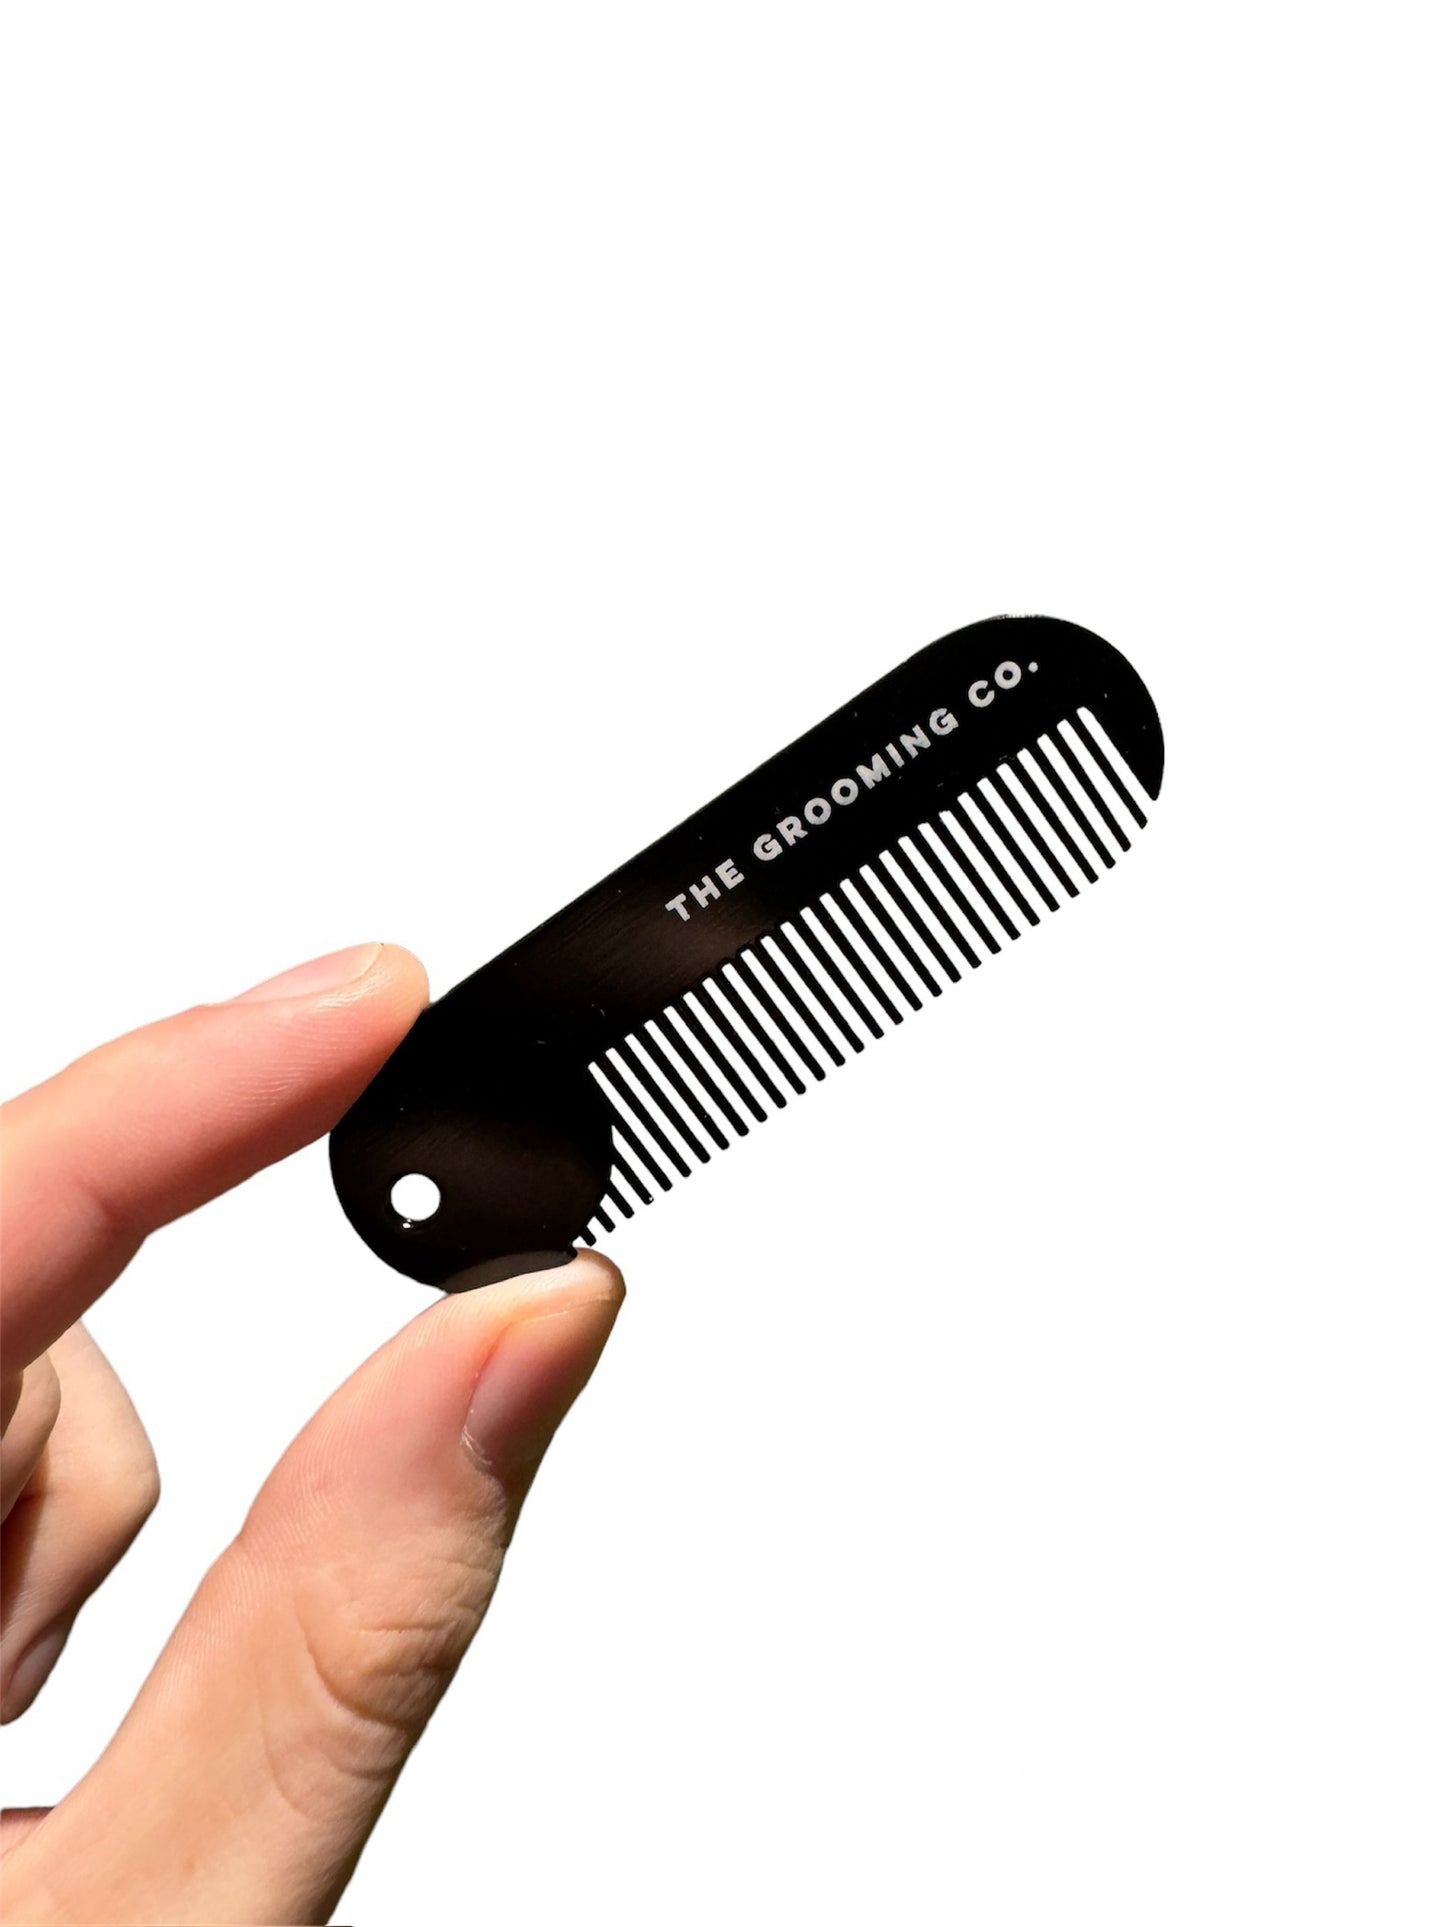 The Beard Key-Comb